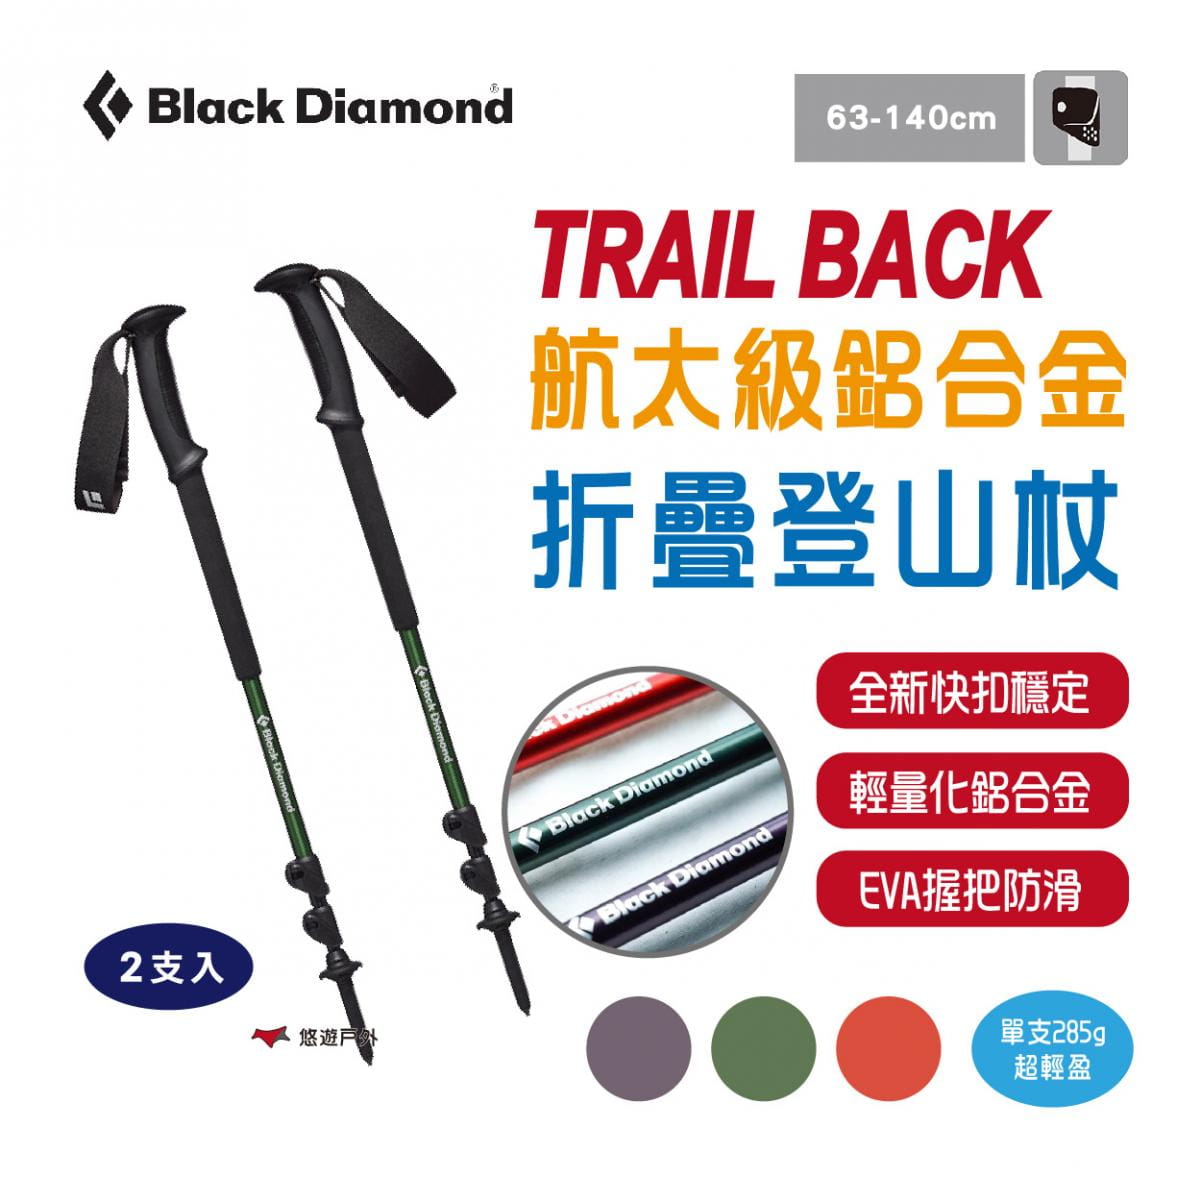 【Black Diamond】TRAIL BACK 航太級鋁合金折疊登山杖 112227 快扣設計 0